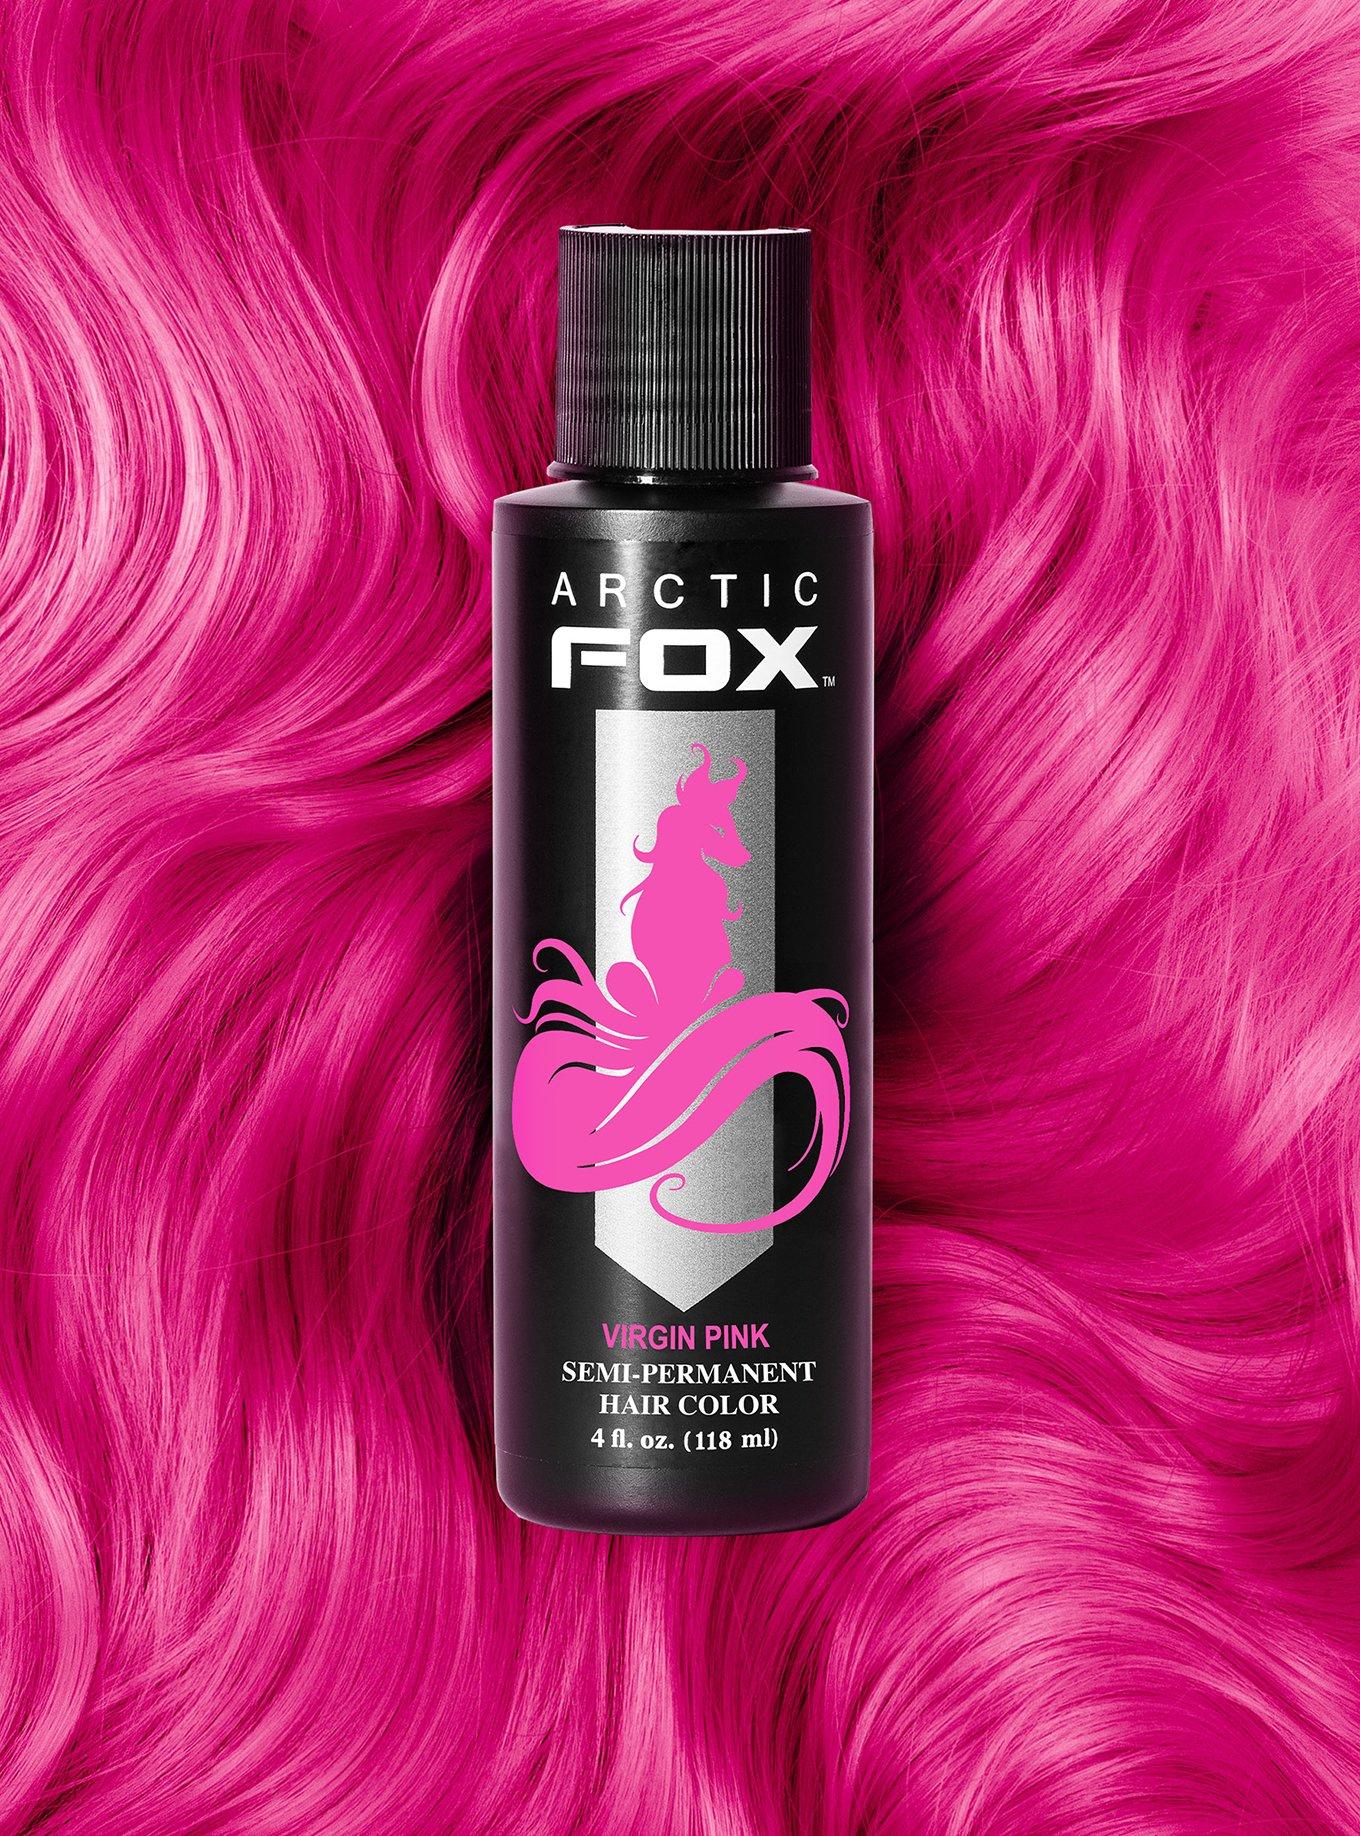 Arctic Fox Semi-Permanent Virgin Pink Hair Dye | Hot Topic